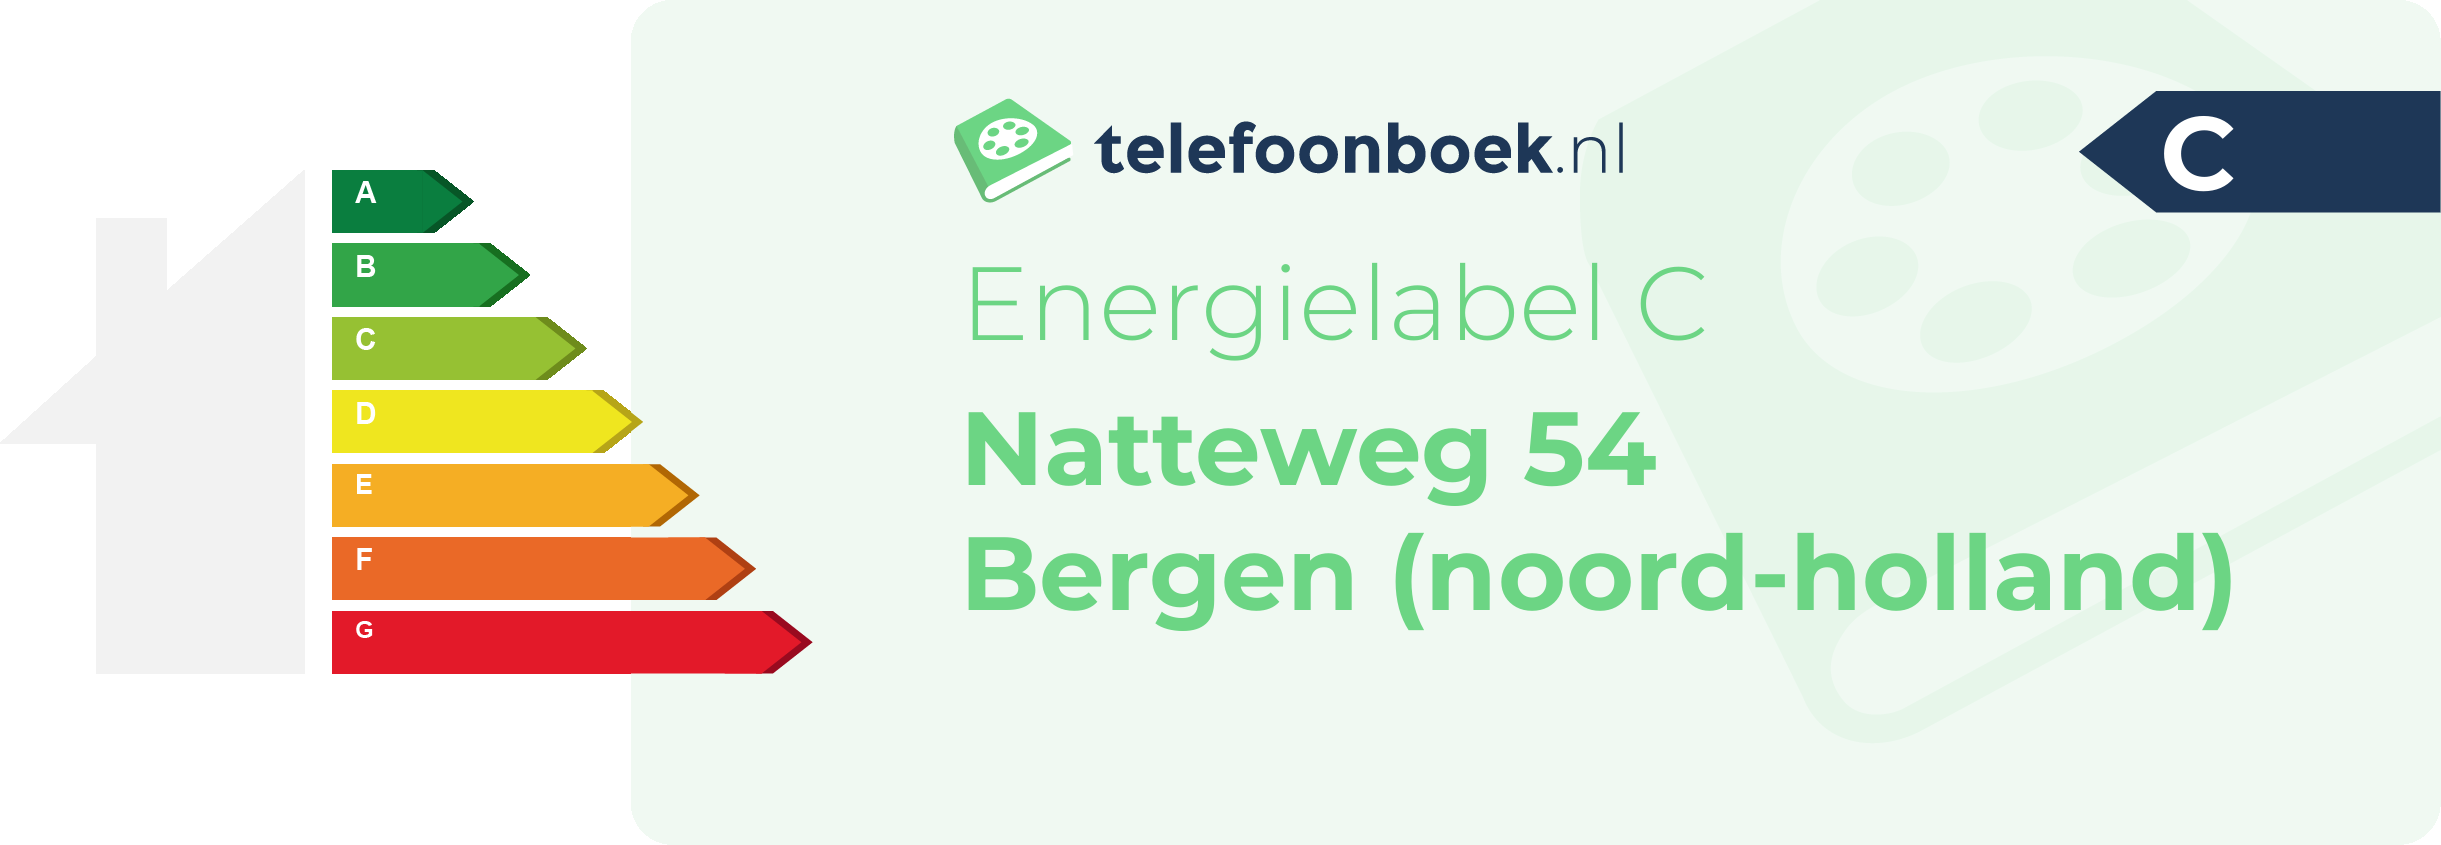 Energielabel Natteweg 54 Bergen (Noord-Holland)